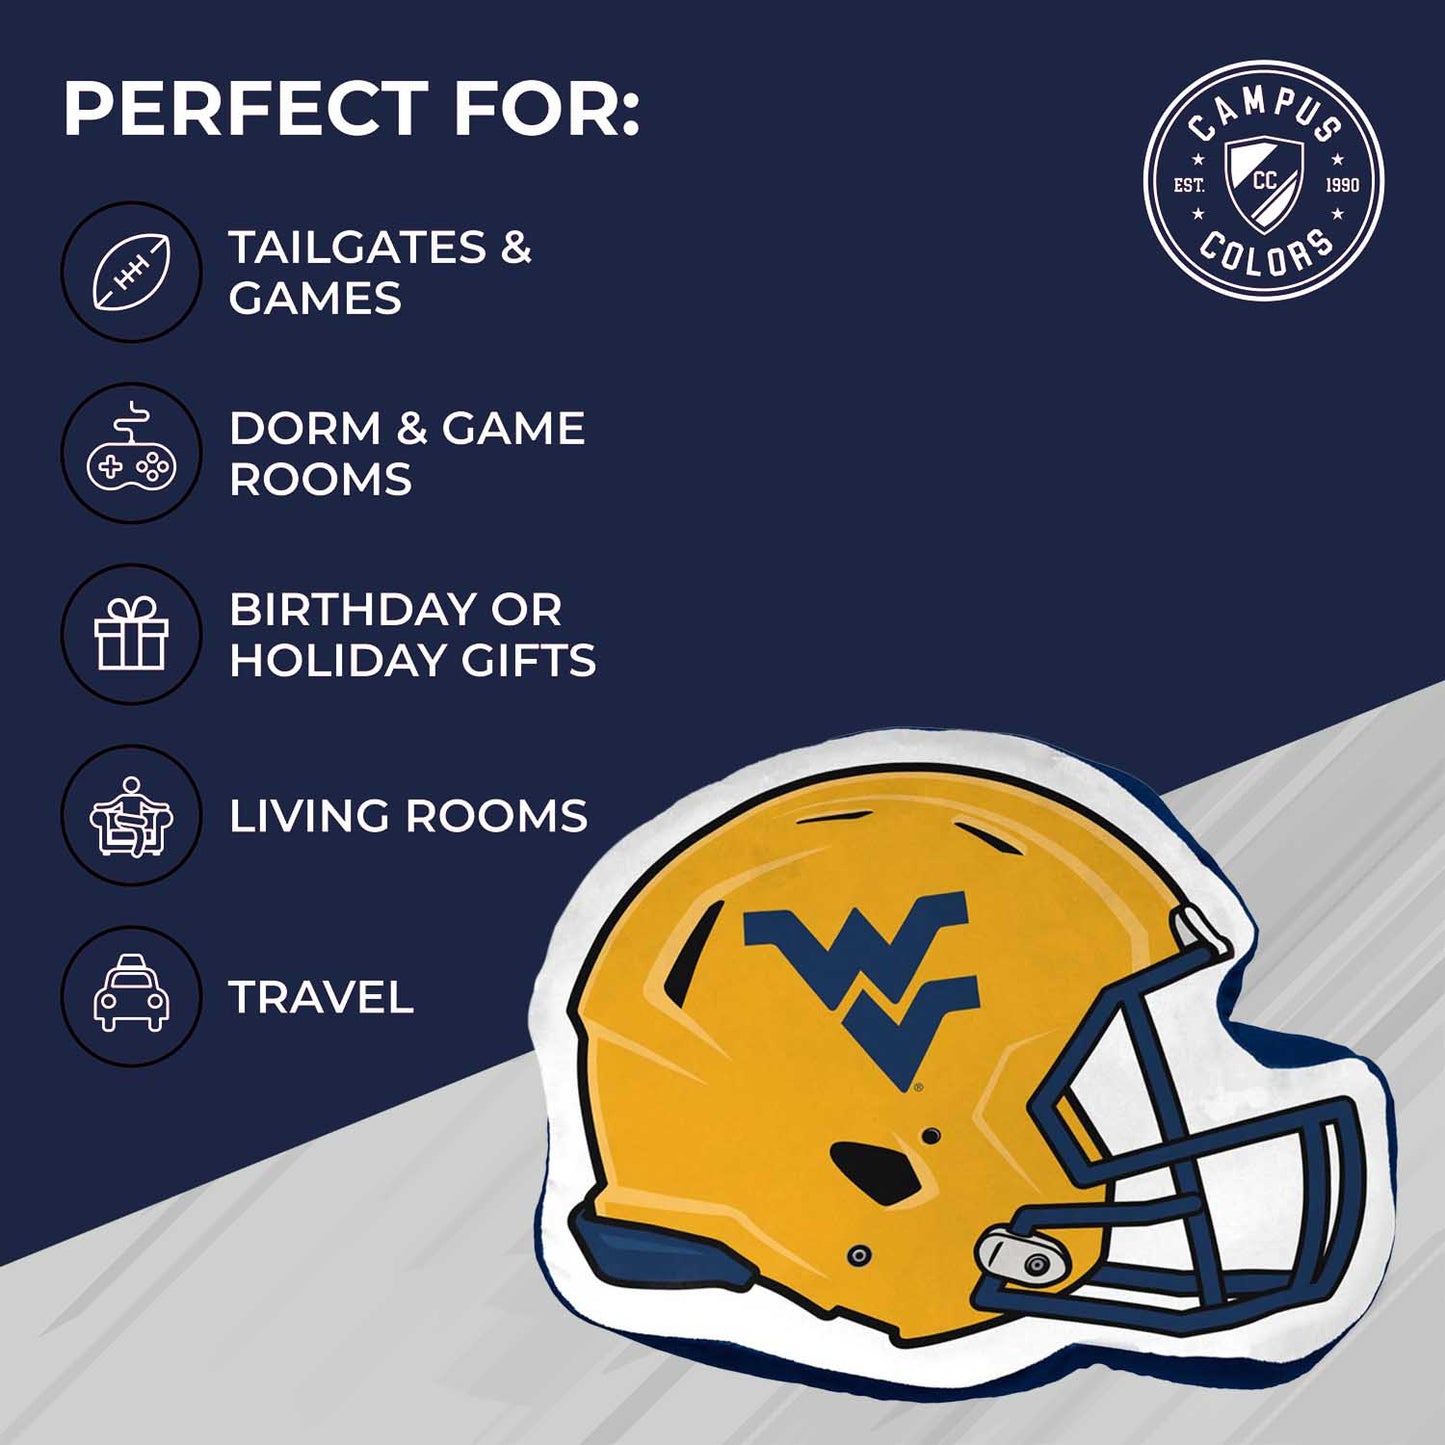 West Virginia Mountaineers NCAA Helmet Super Soft Football Pillow - Gold